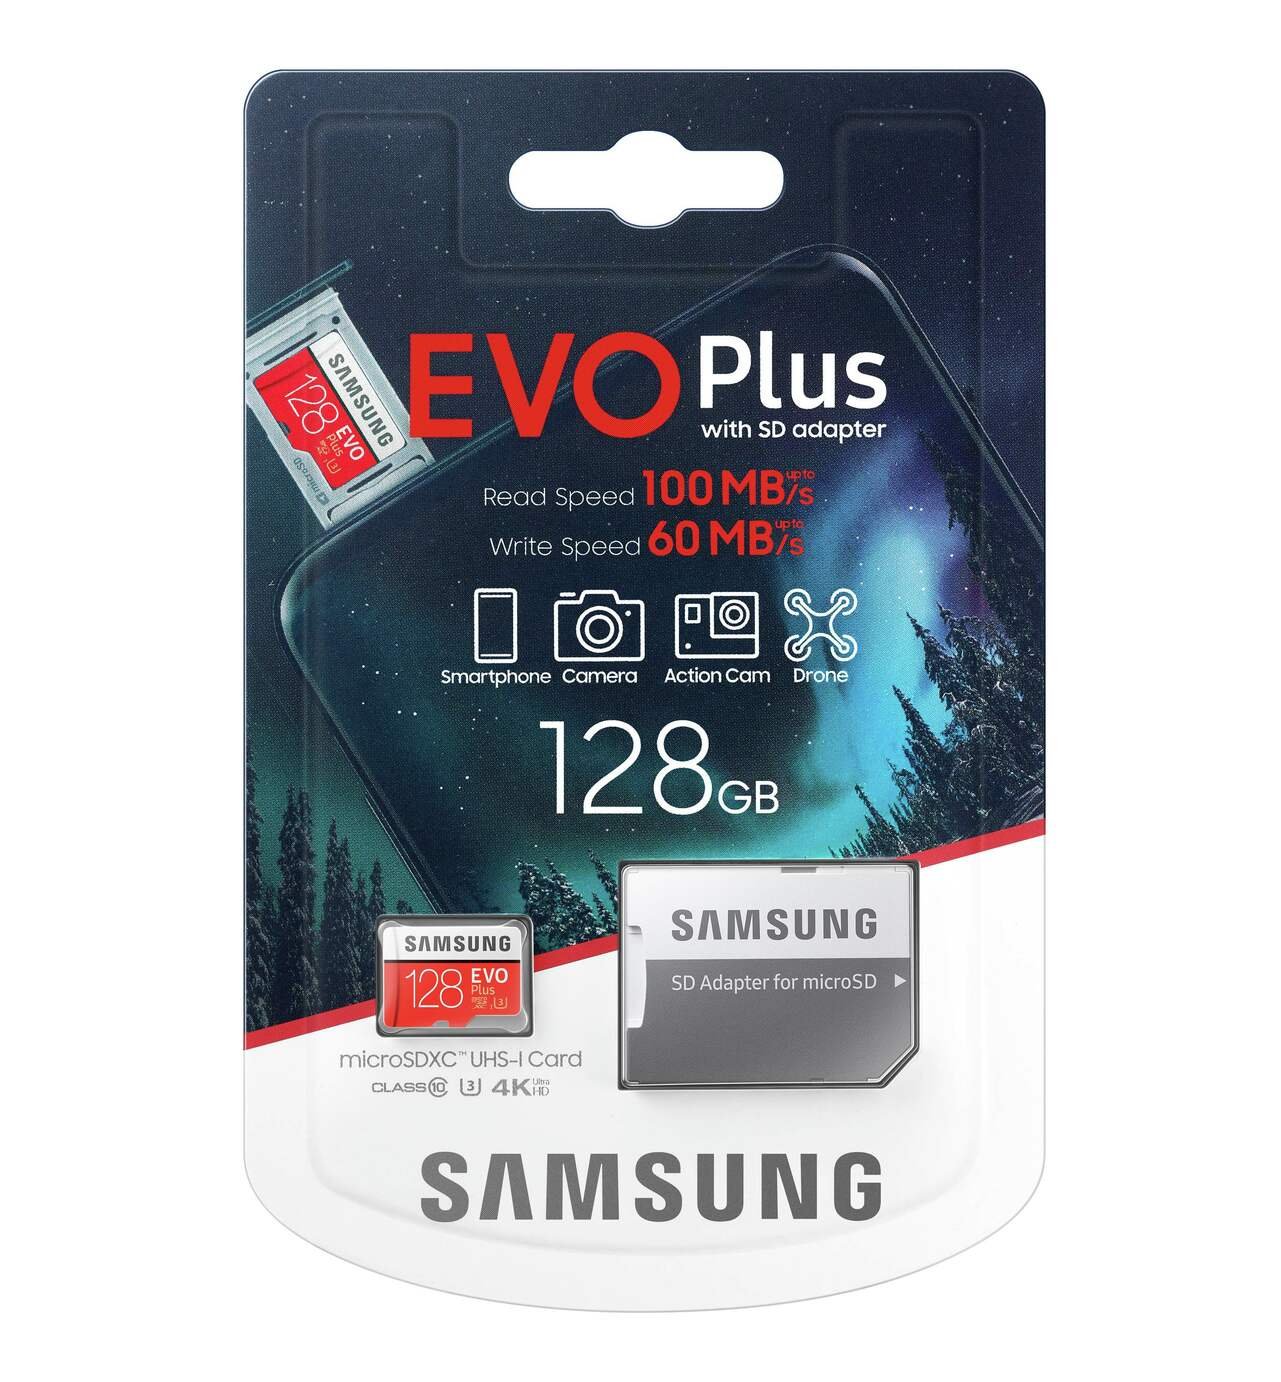 Samsung Evo Plus 100MBs MicroSD Memory Card Review